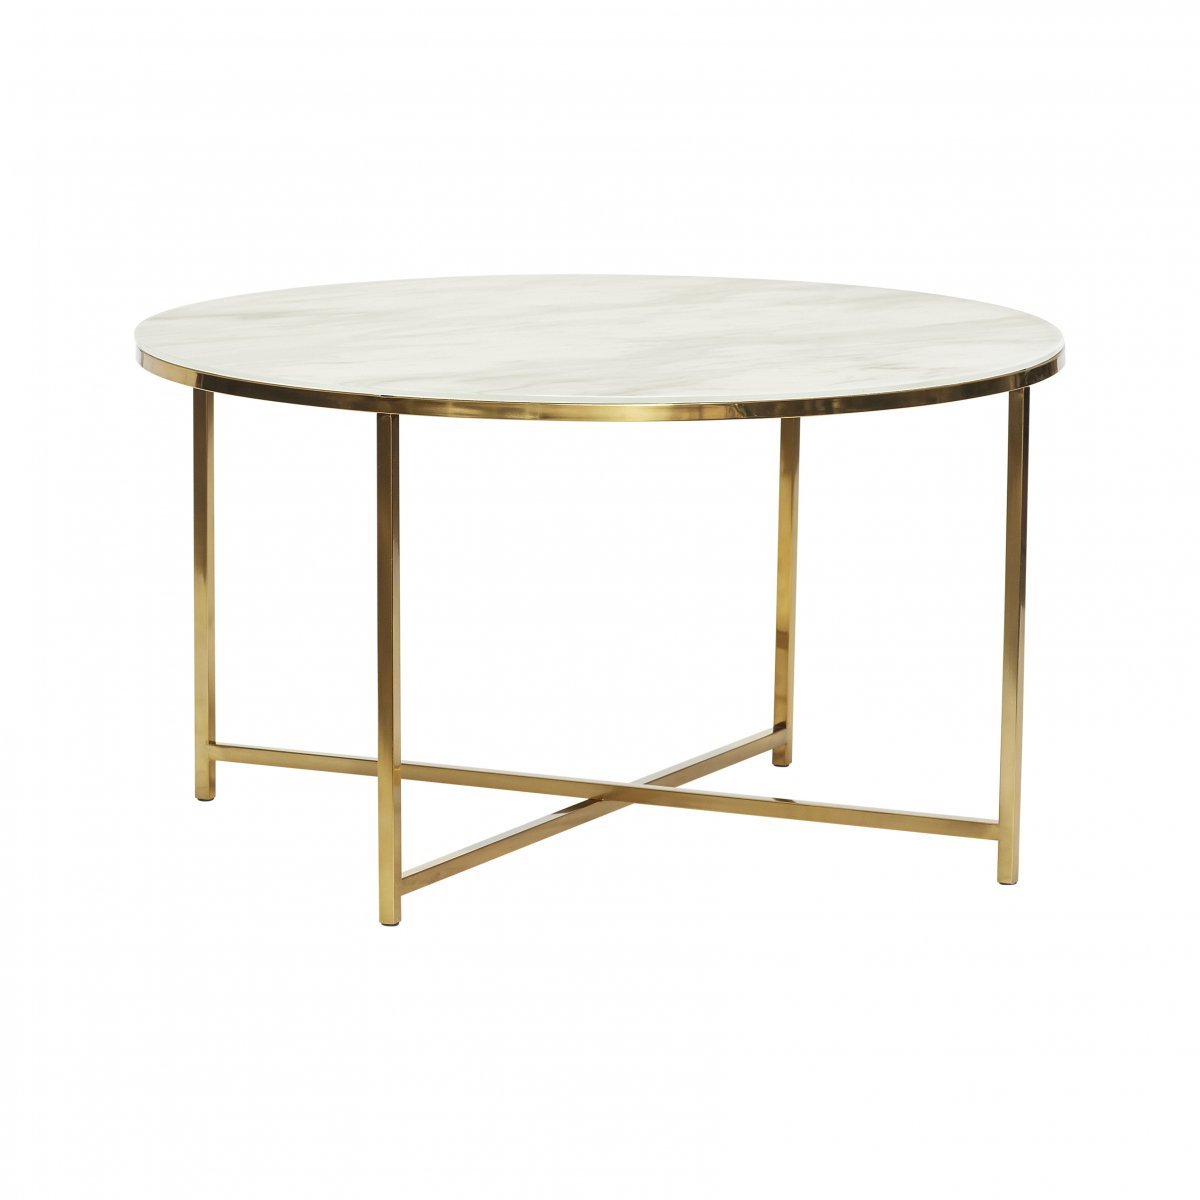 PROMO Hubsch - Table basse ronde 80cm effet marbre XIBI MEUBLES & DESIGN